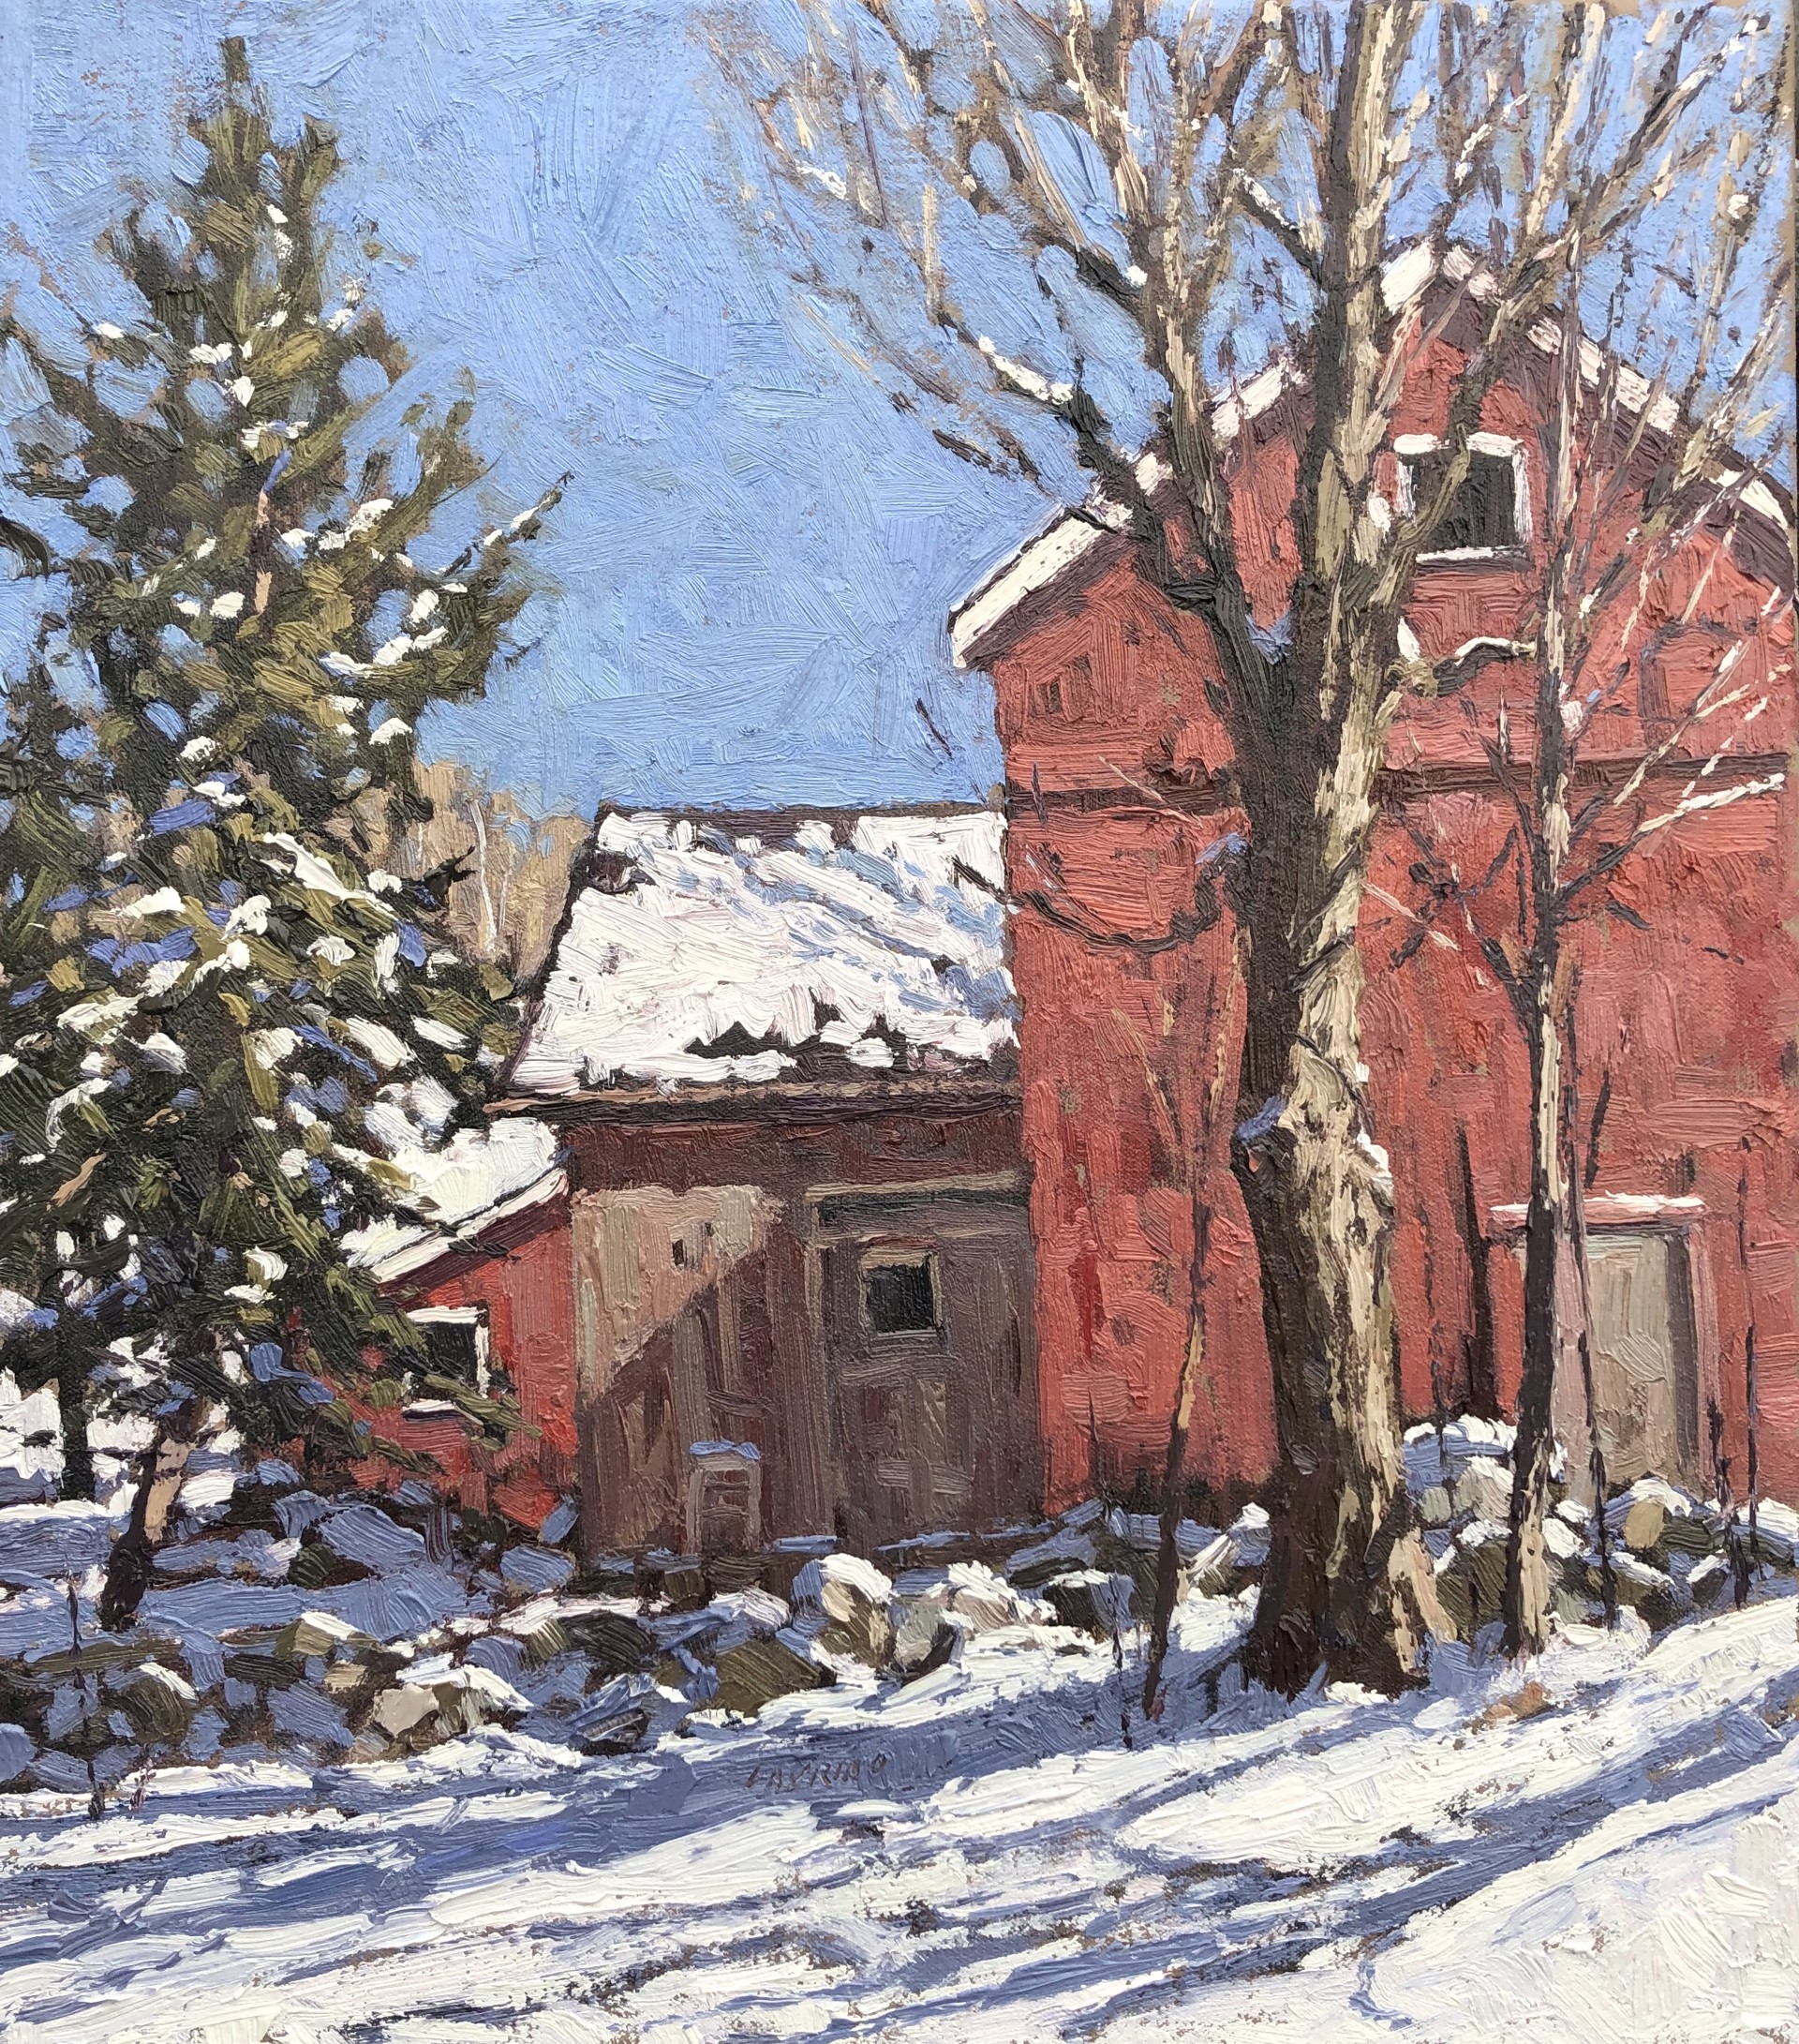 Nonnewaug Barns by Jim Laurino